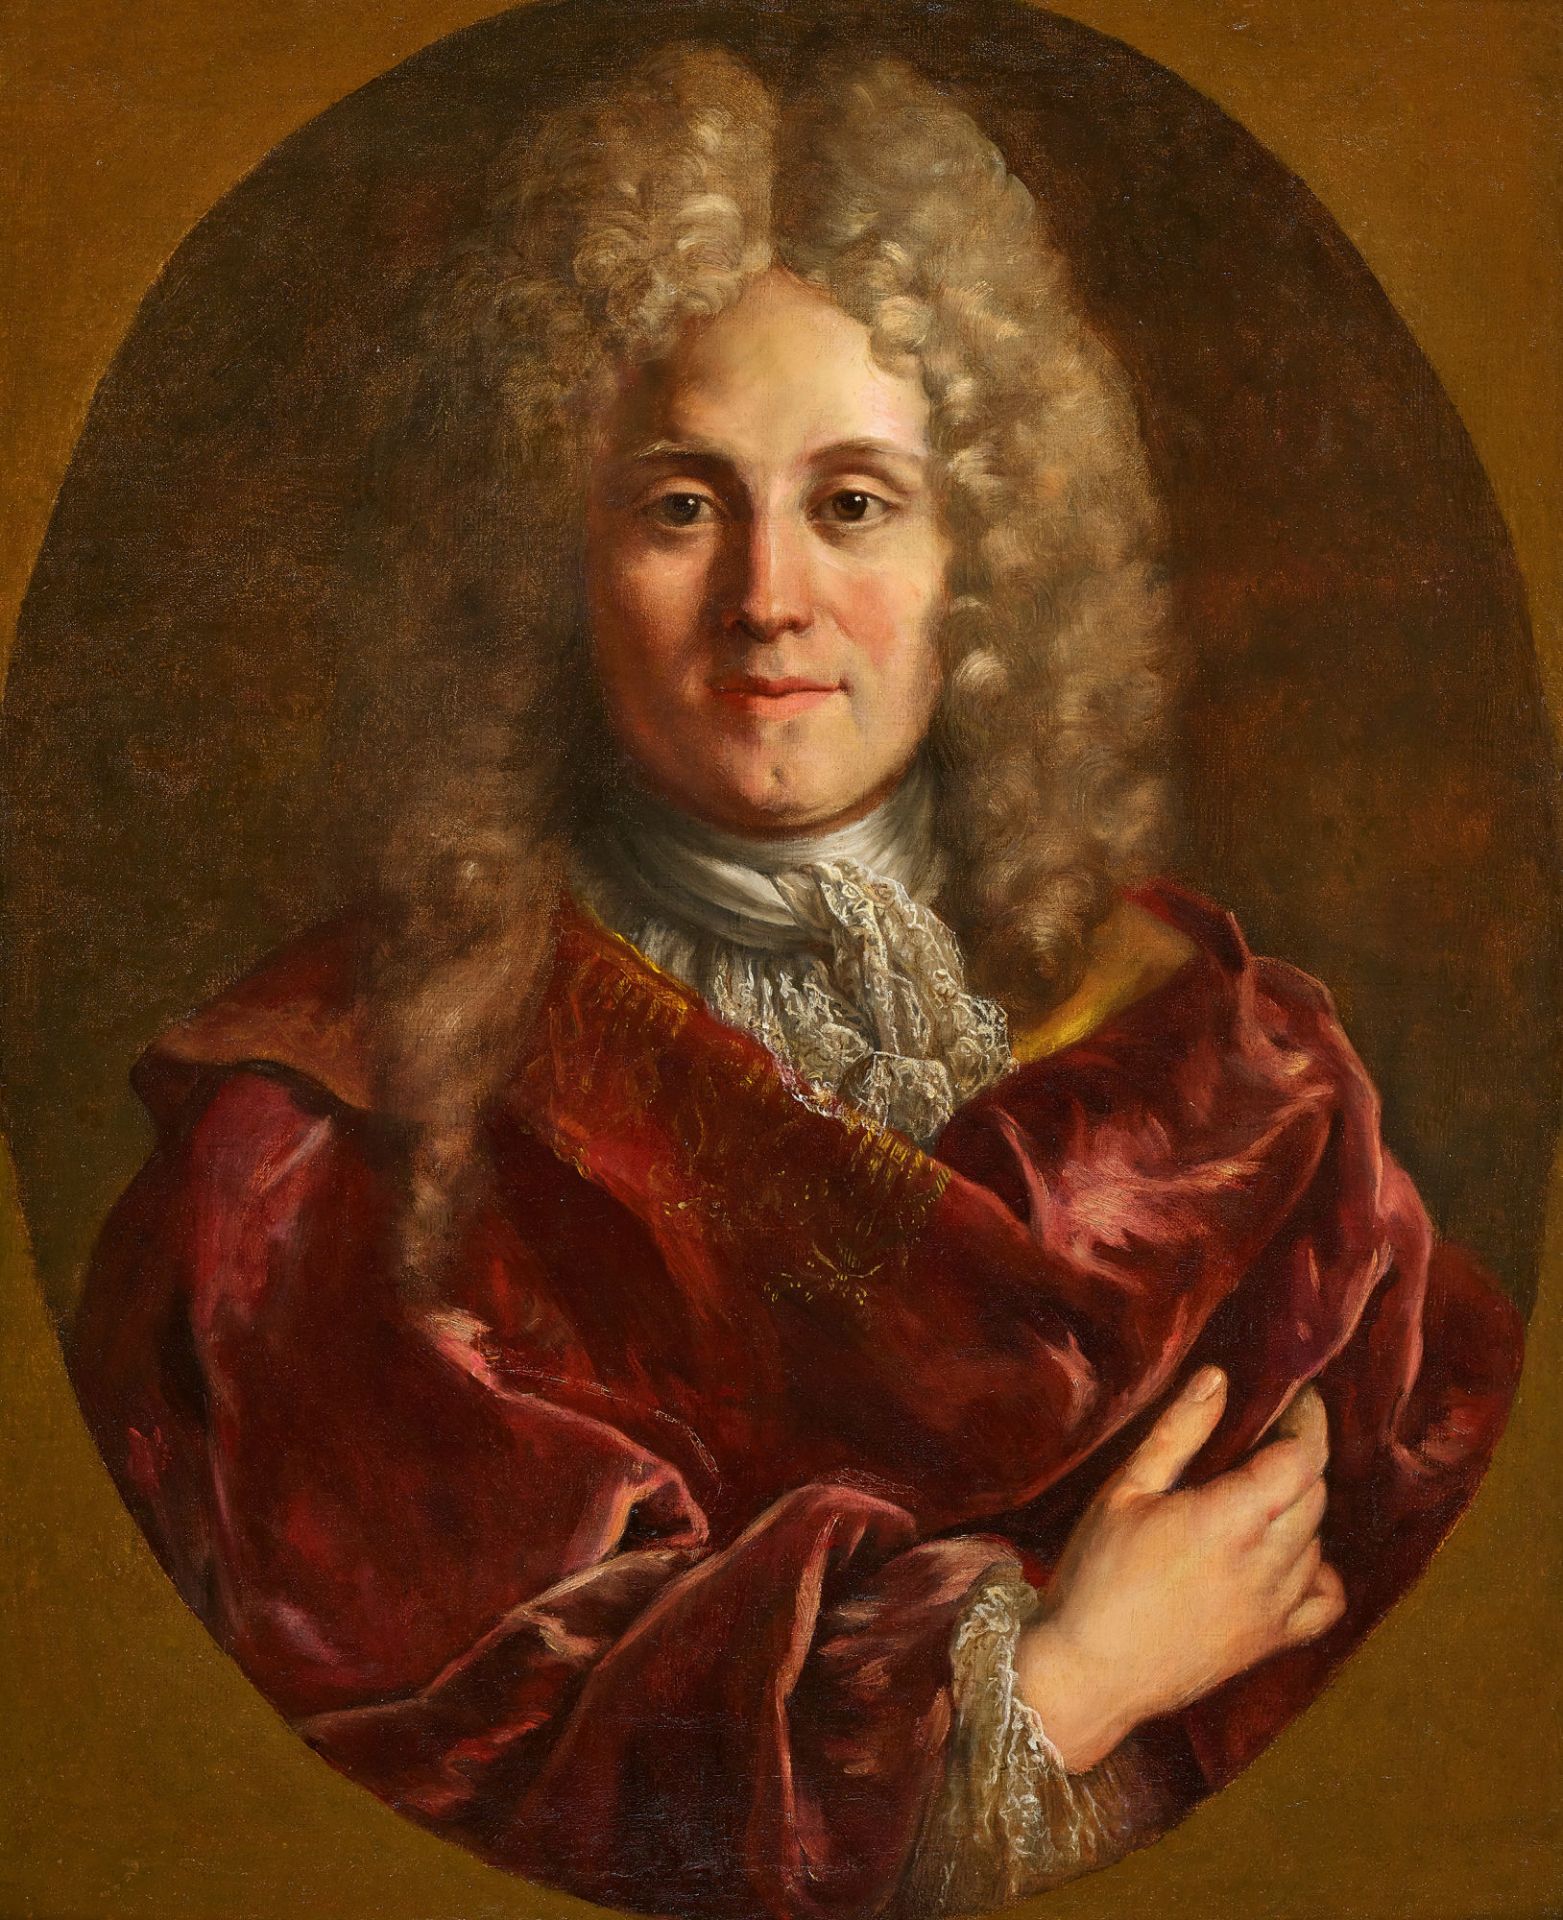 OUDRY, JEAN BAPTISTE, In der Art - Manner of: Portrait d'un gentilhomme en habit rouge.